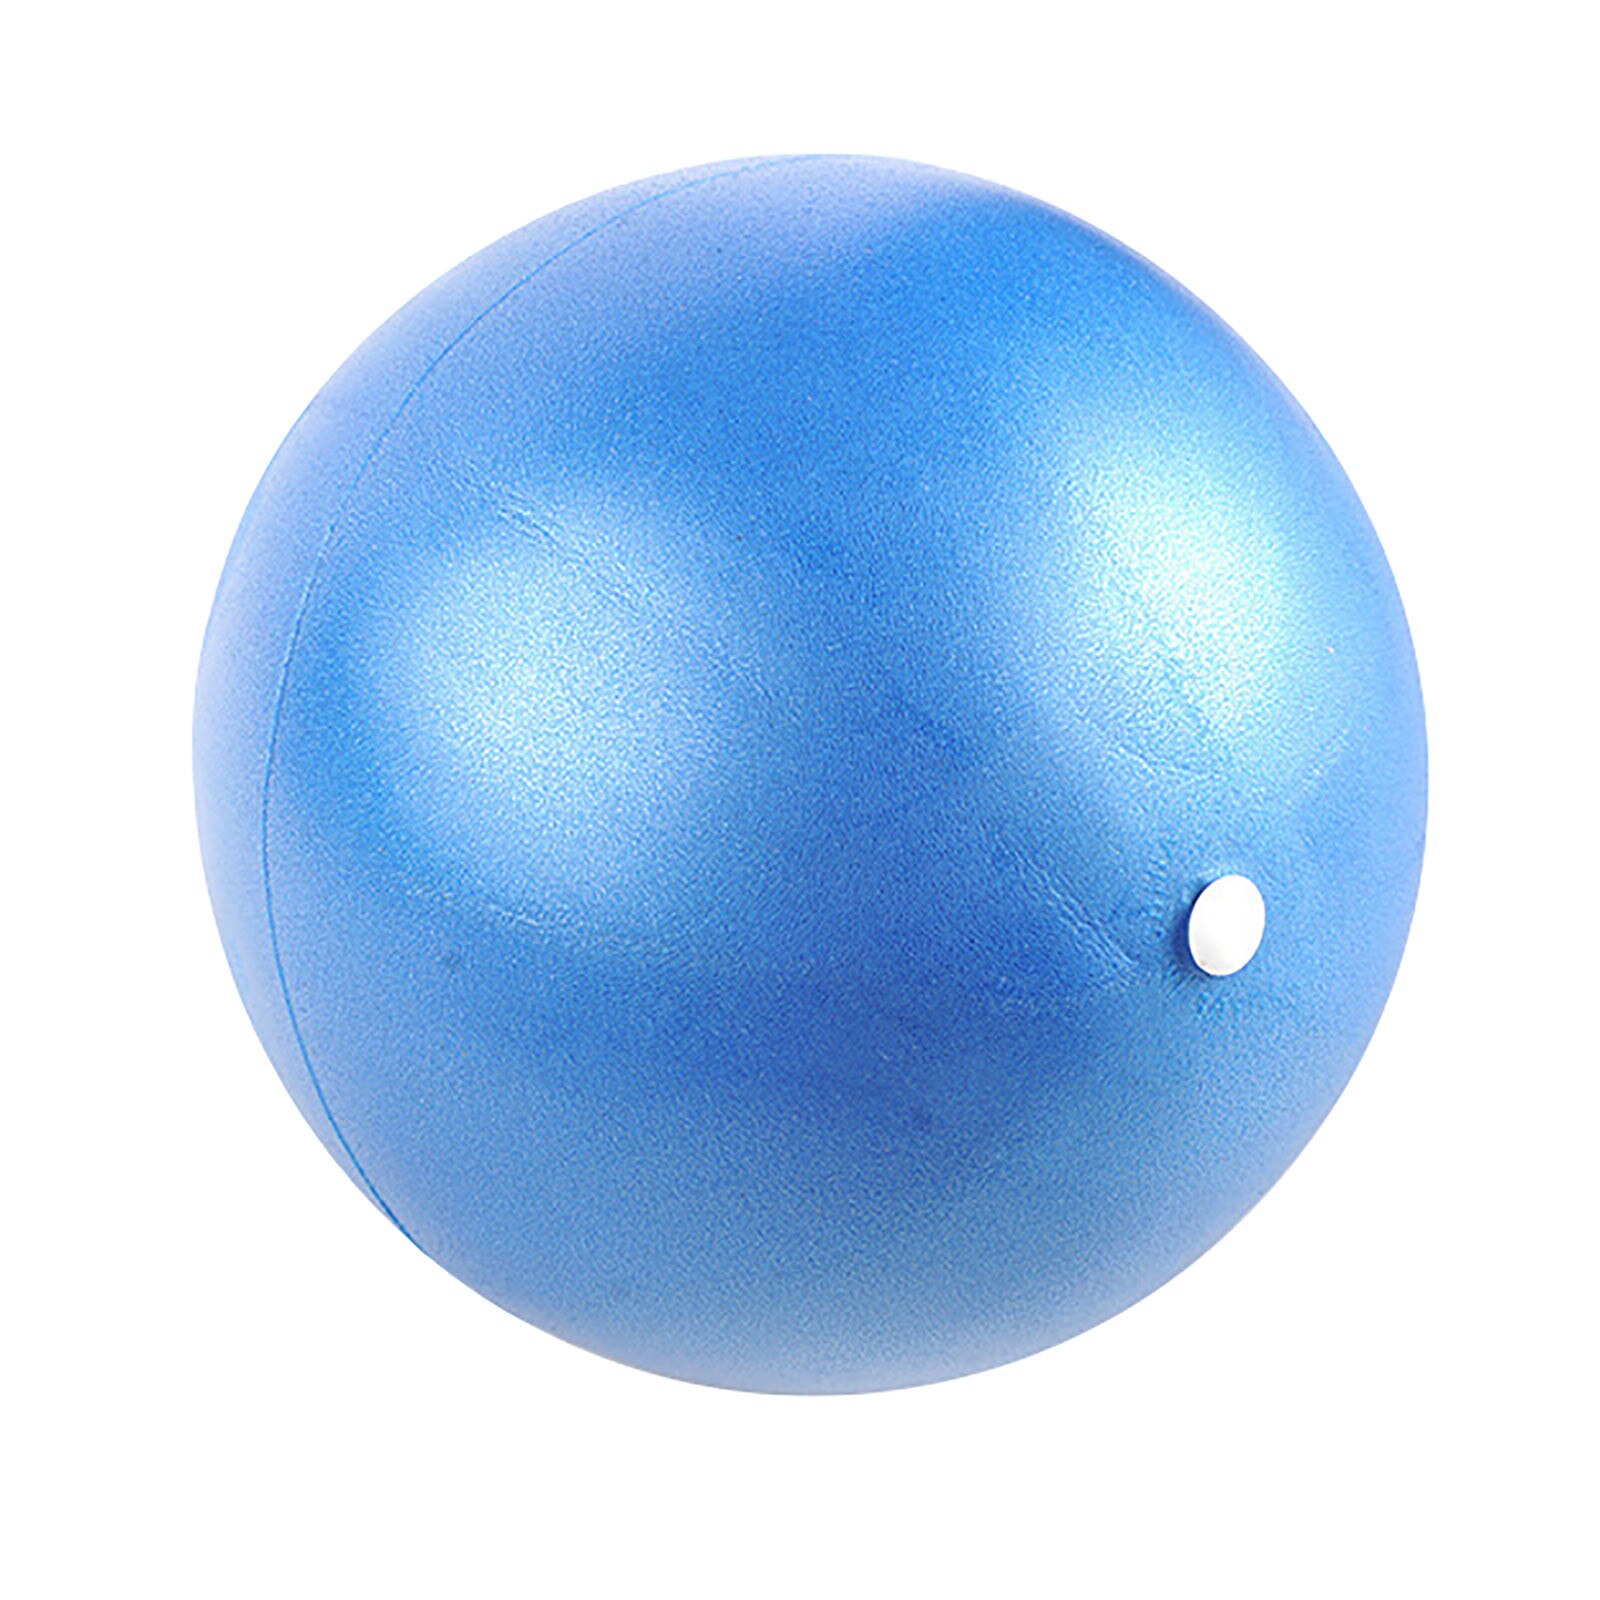 Yoga Ball Fitness for Fitness Pilates Exercise Stability Balance Ball 15cm Fitness & Yoga Equipment: A